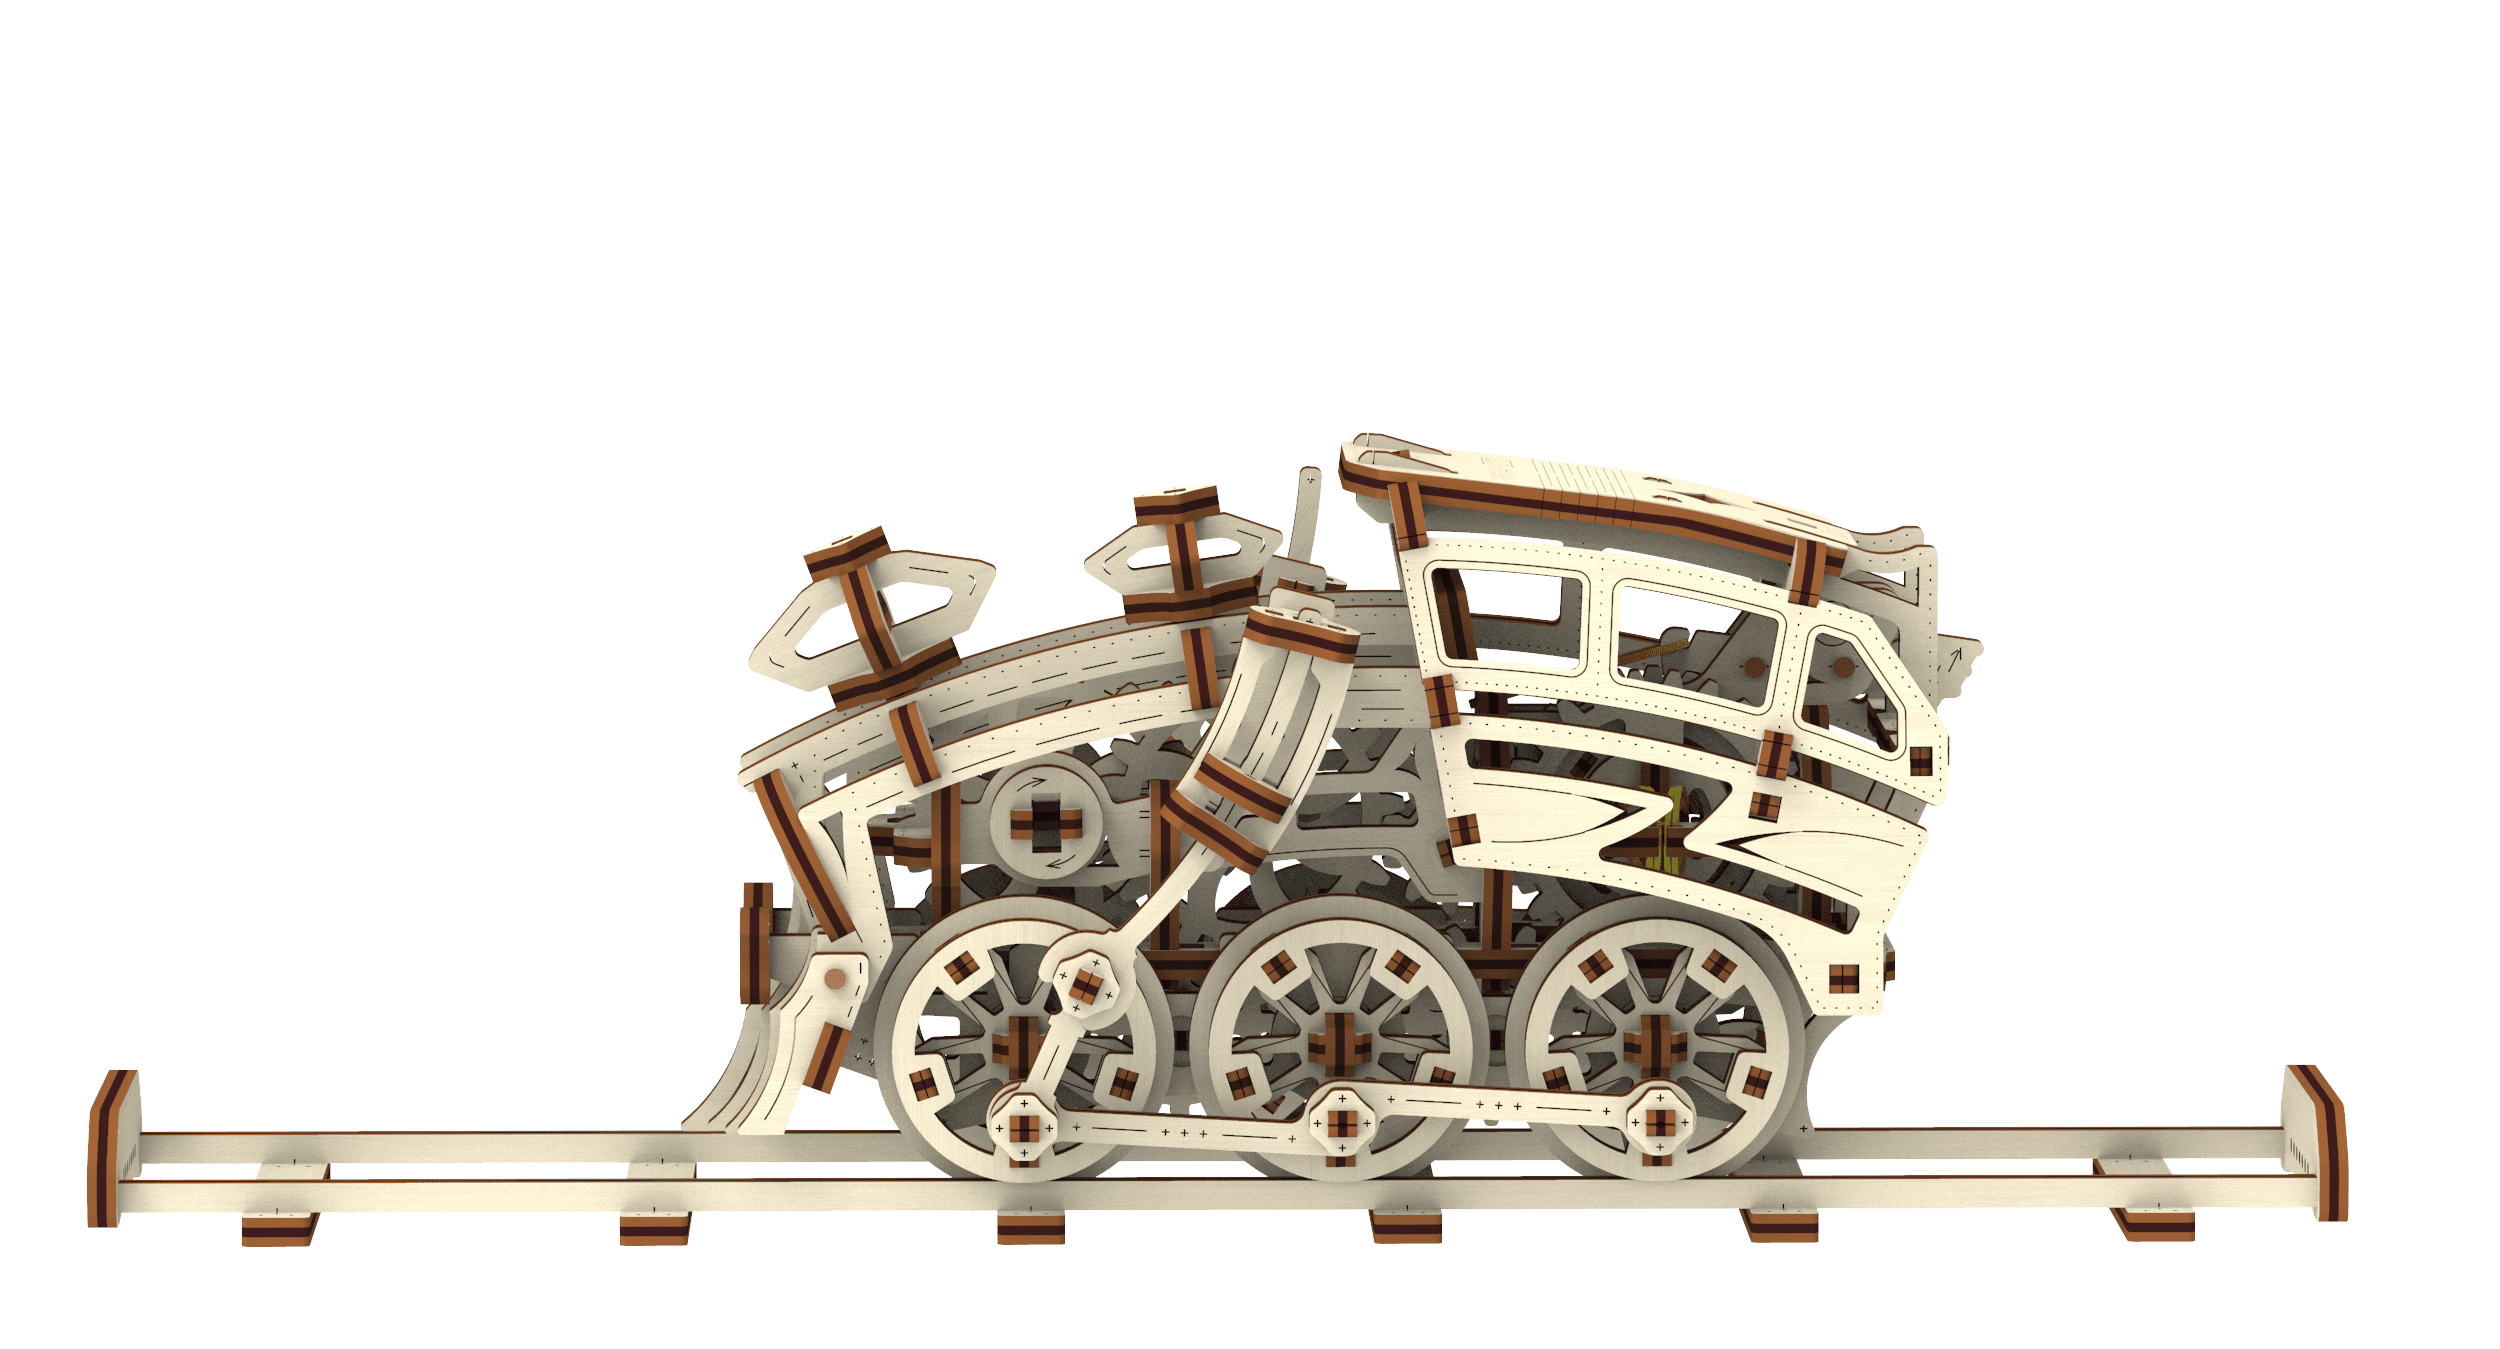 Wooden 3D Puzzle - Dream Express locomotive